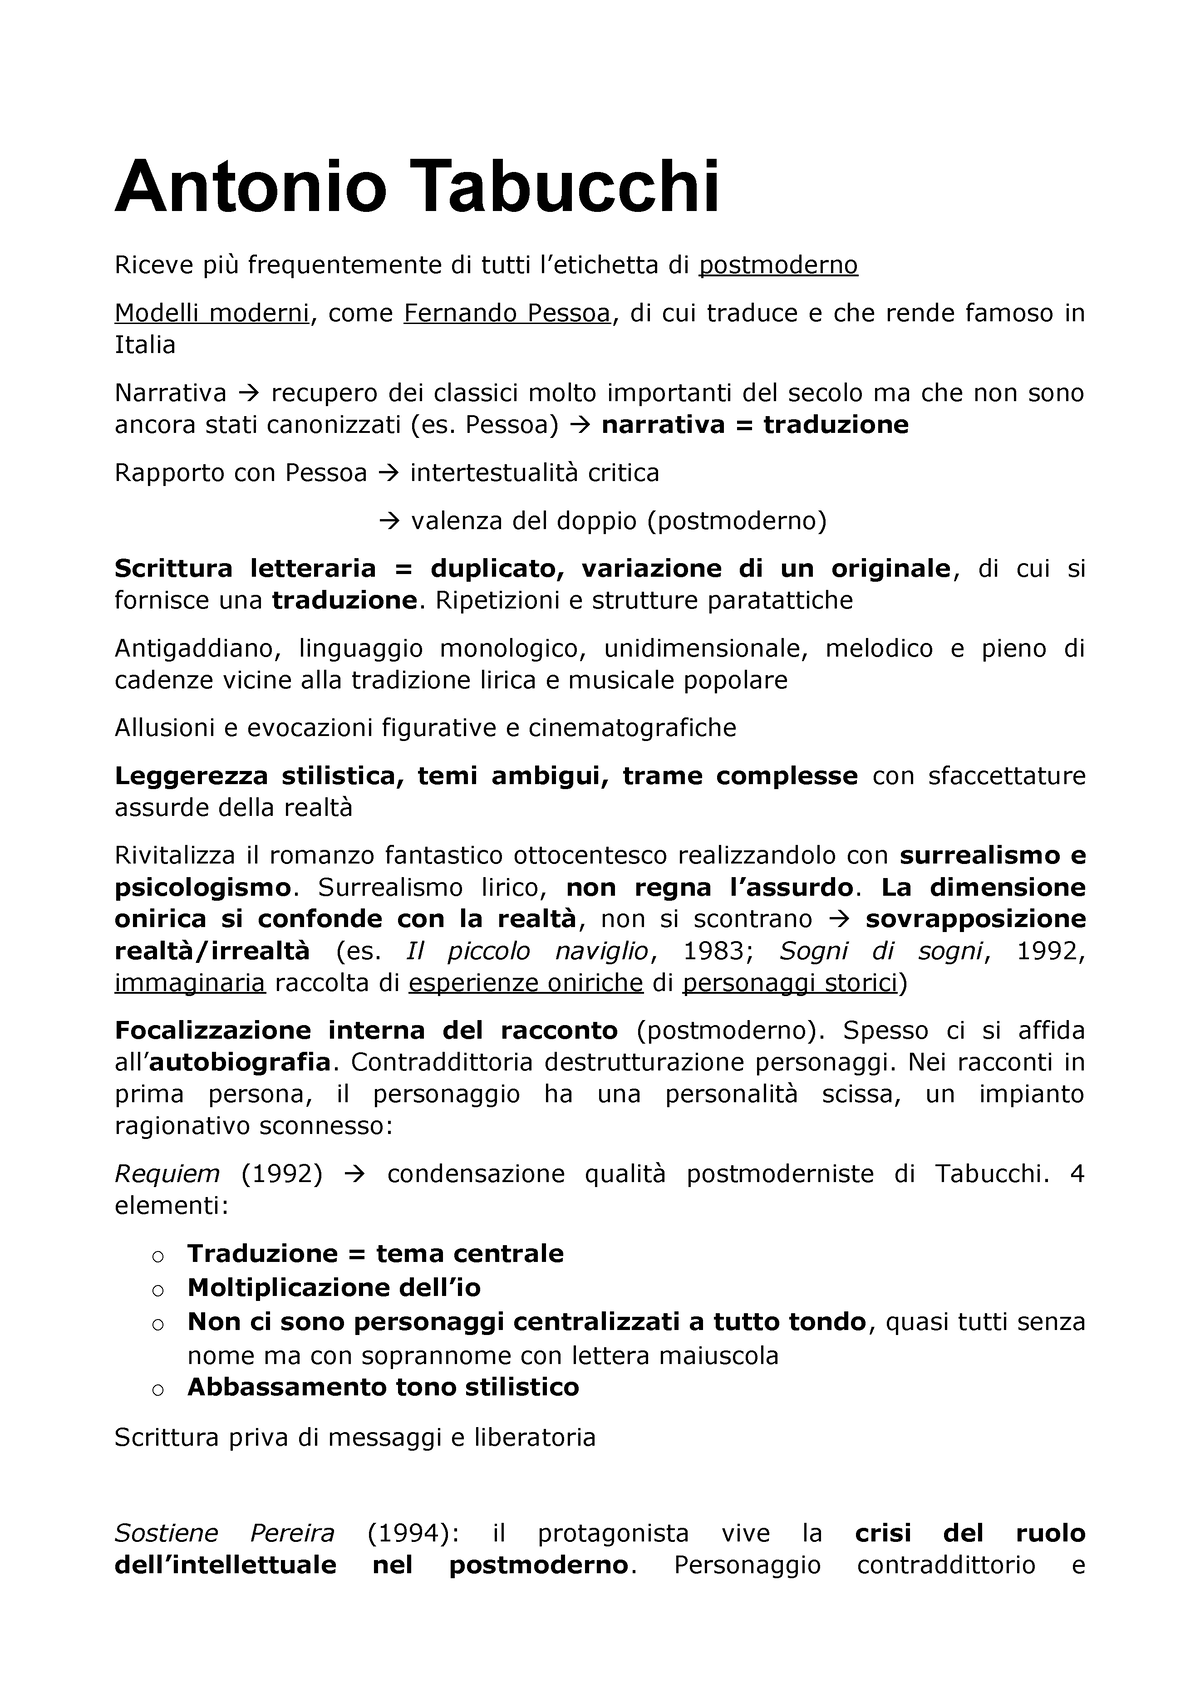 Antonio Tabucchi Letteratura Italiana Contemporanea uniroma1 StuDocu